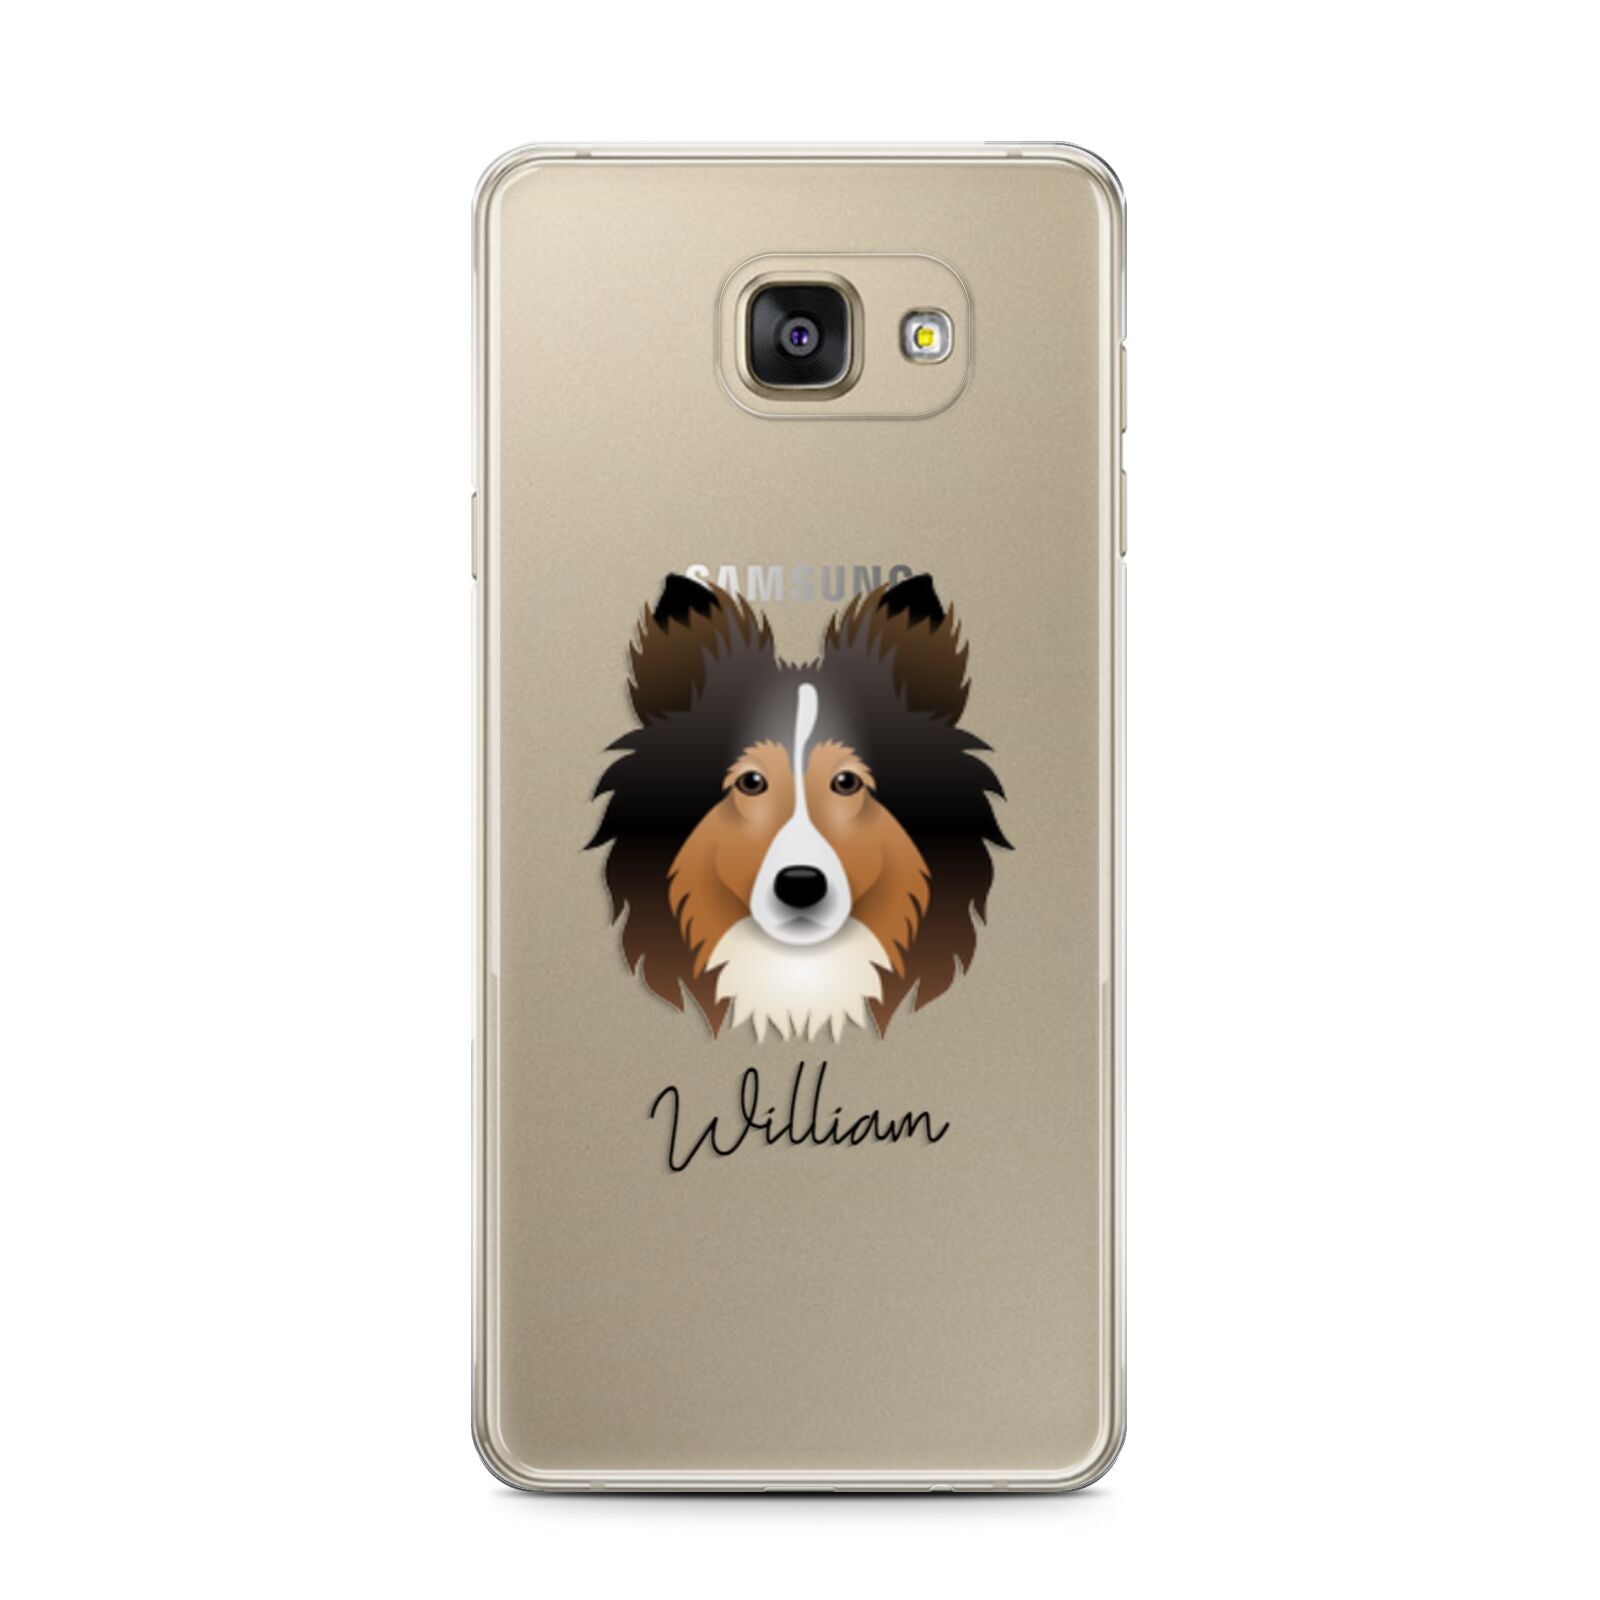 Shetland Sheepdog Personalised Samsung Galaxy A7 2016 Case on gold phone